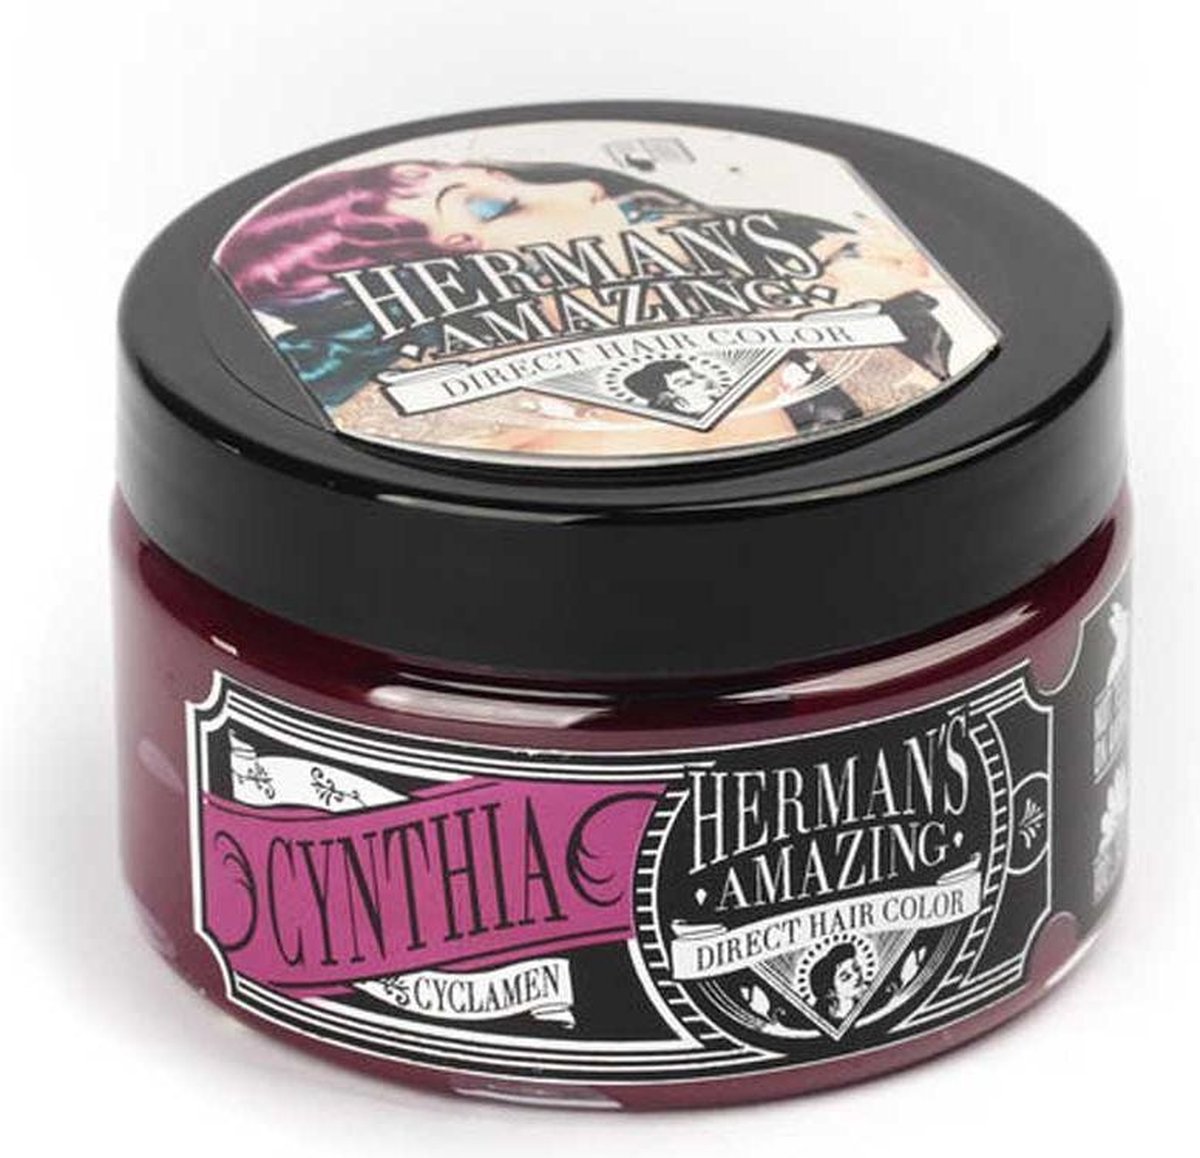 Hermans Amazing Haircolor - Cynthia Cyclamen Semi permanente haarverf - Roze